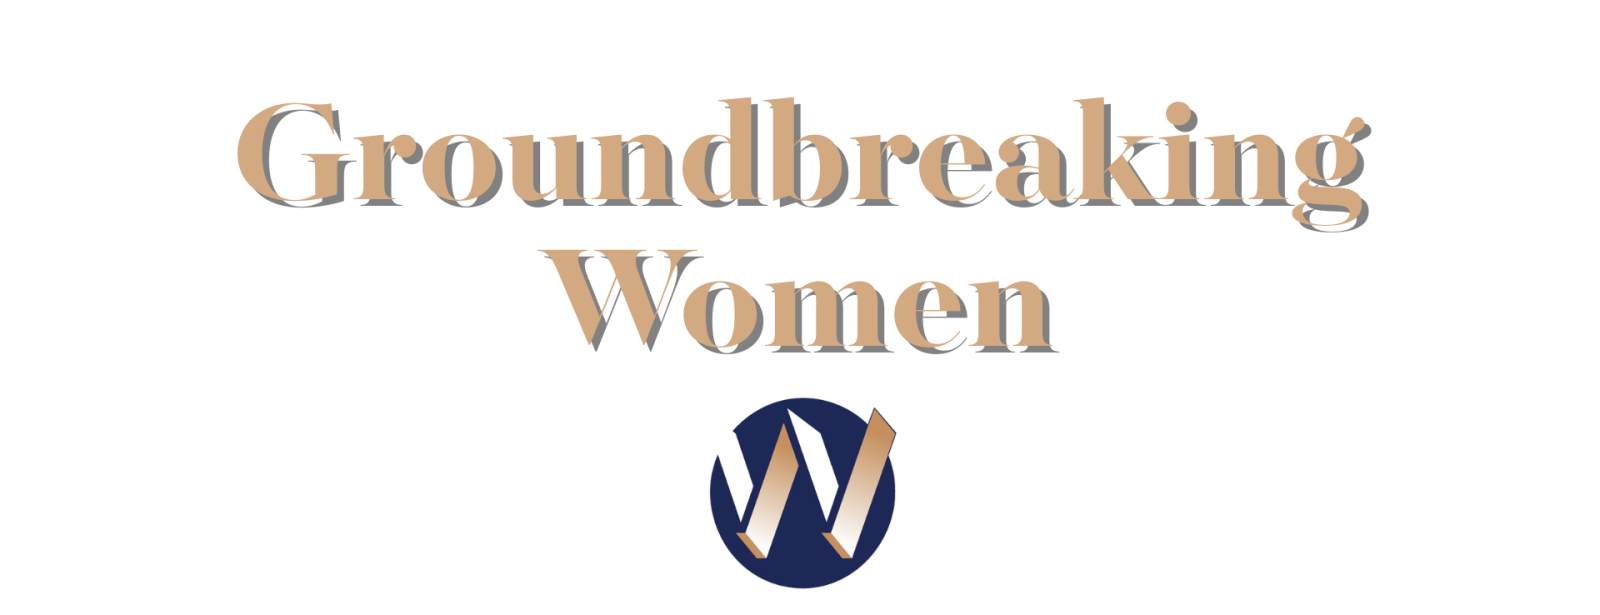 Groundbreaking Women Logo Type (1)